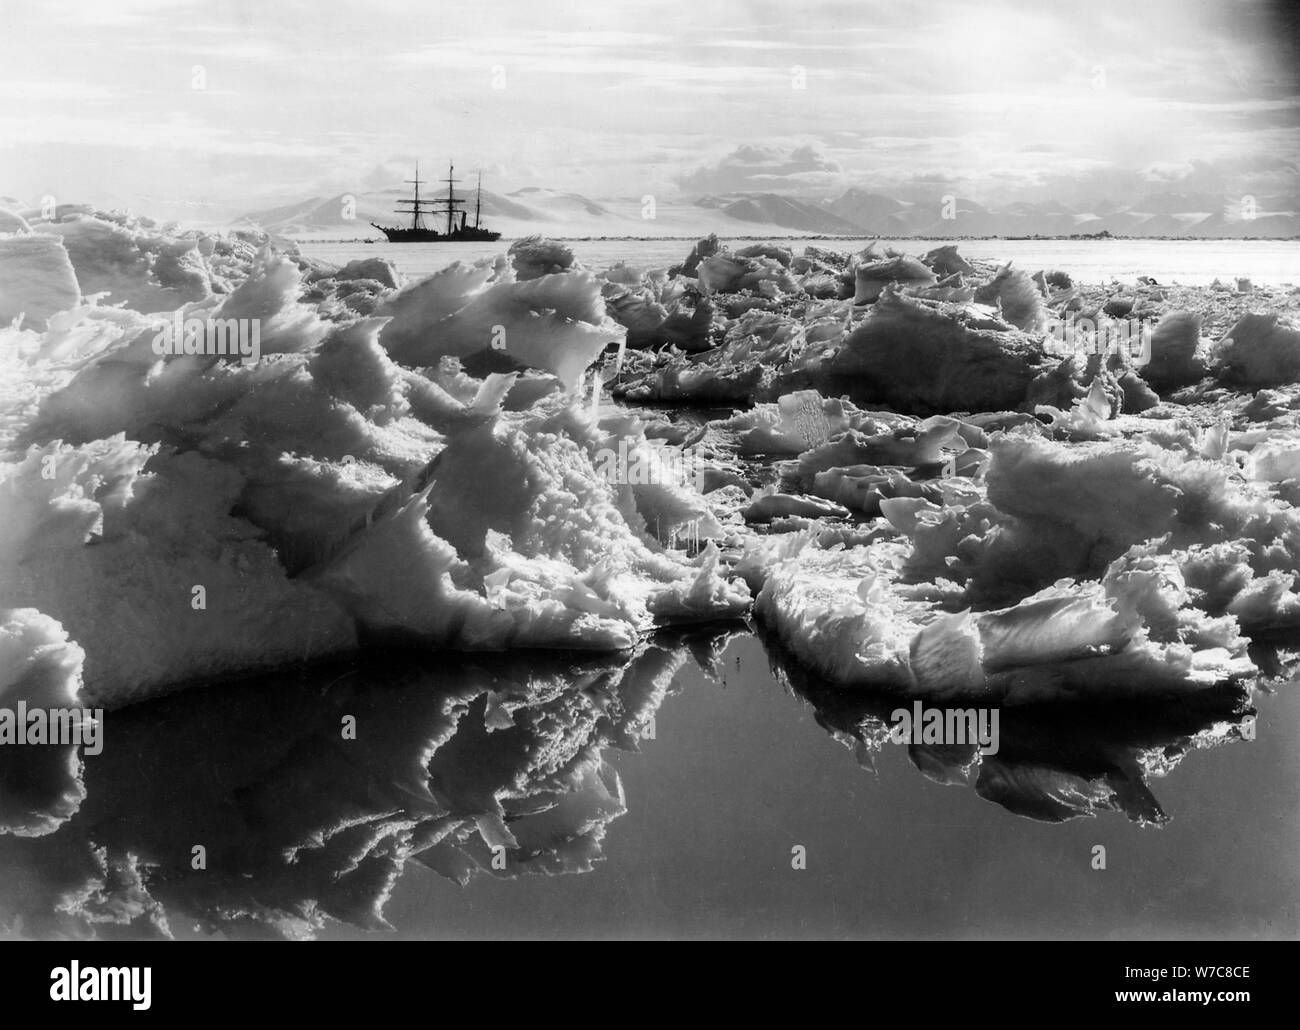 The 'Terra Nova' in McMurdo Sound, Antartica, 1911. Artist: Herbert Ponting Stock Photo